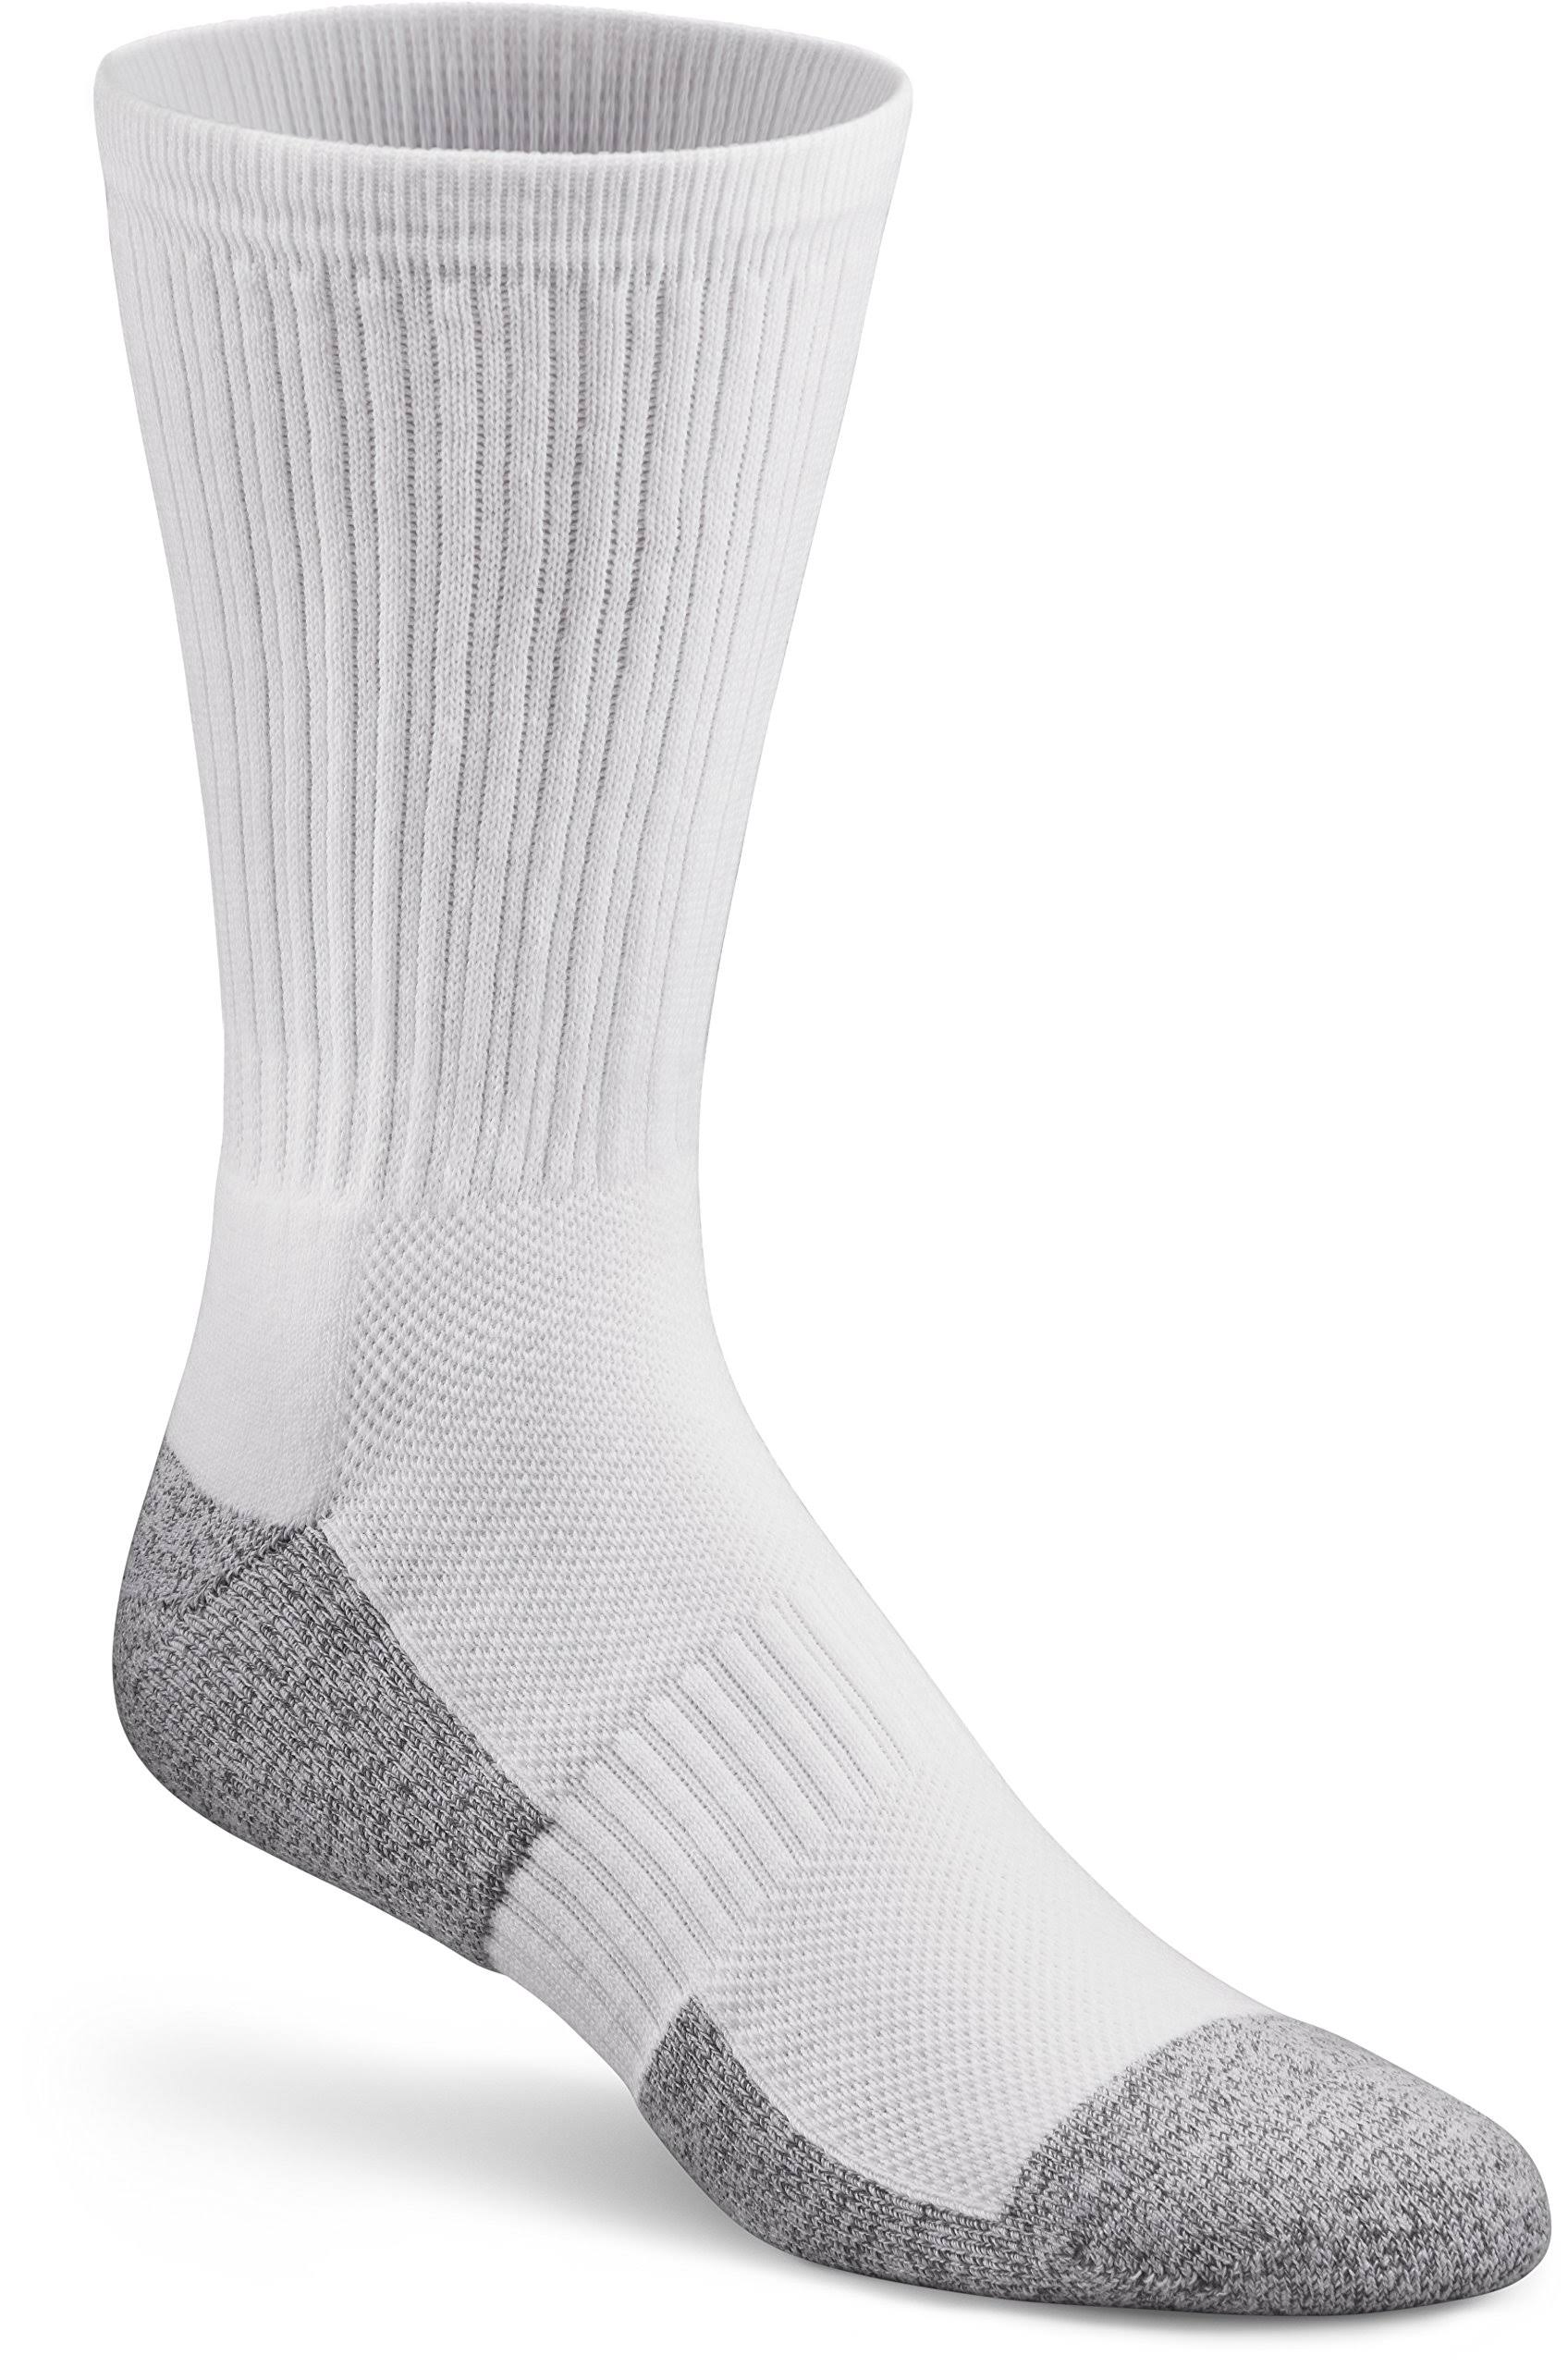 Dr. Comfort Diabetic Crew Socks - White Medium